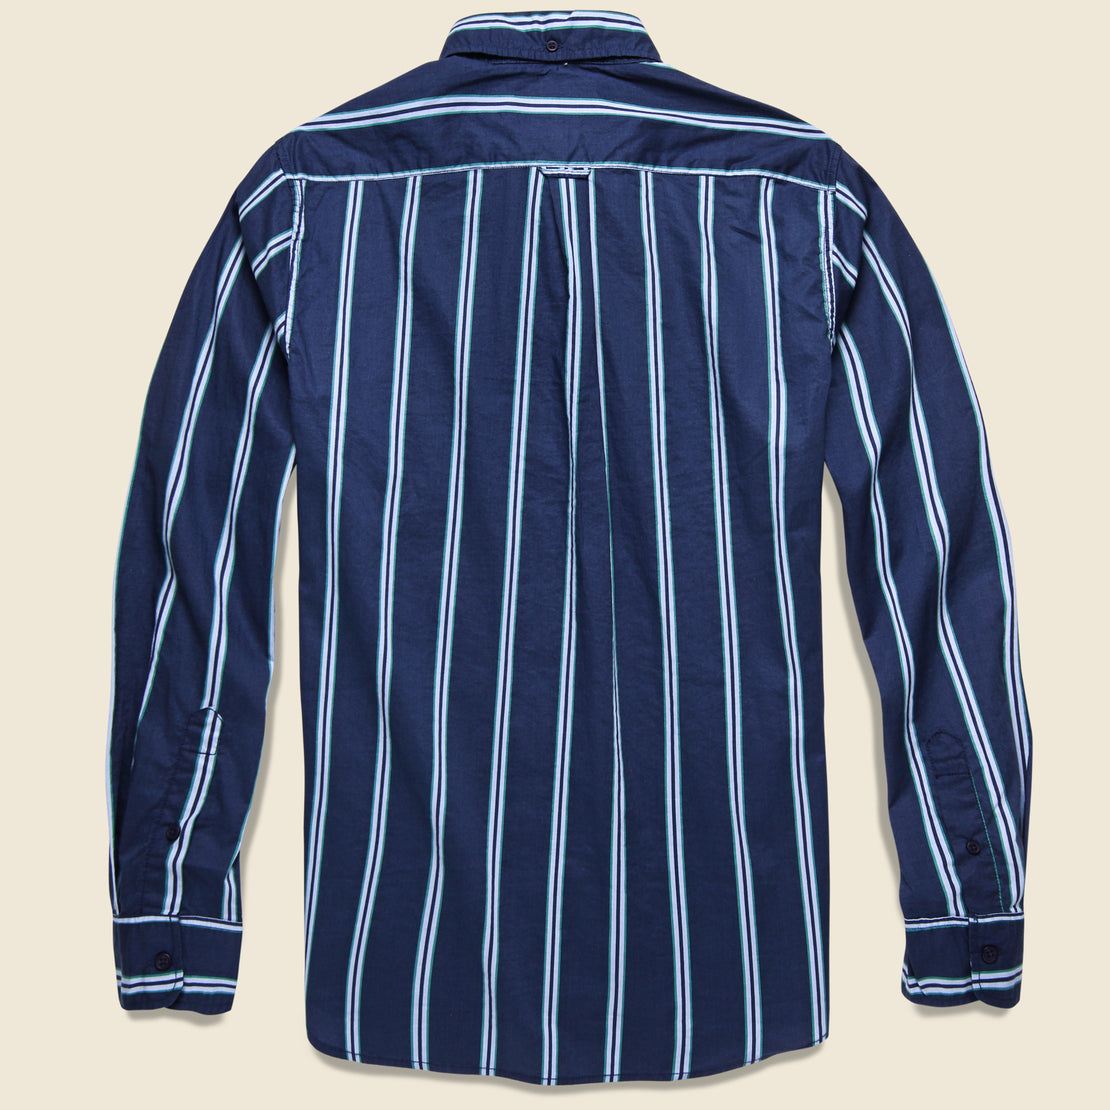 Vintage Stripe Print Shirt - Navy - Modern Liberation - STAG Provisions - Tops - L/S Woven - Stripe